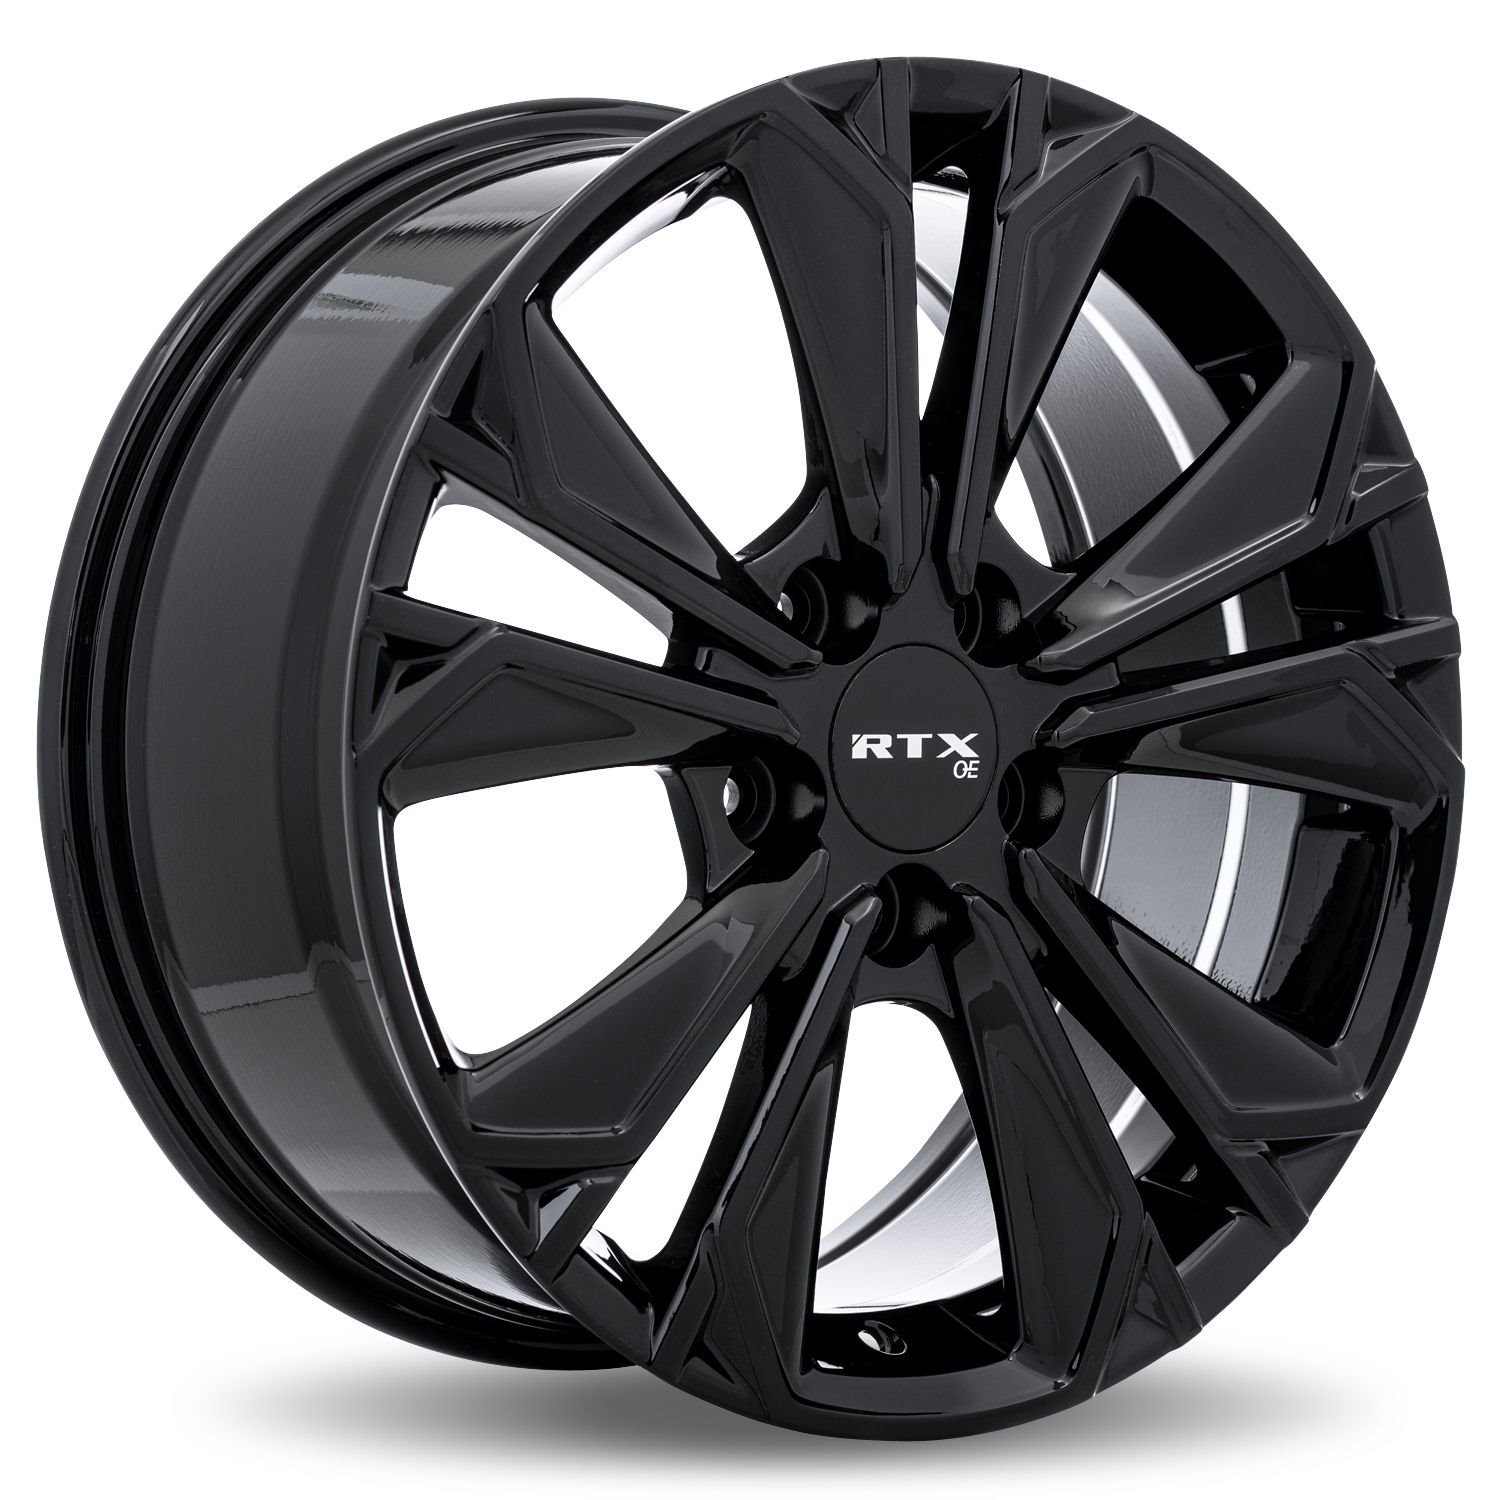 083187 OE-Series HD-01 Wheel [Size: 18" x 7.50"] Gloss Black Finish